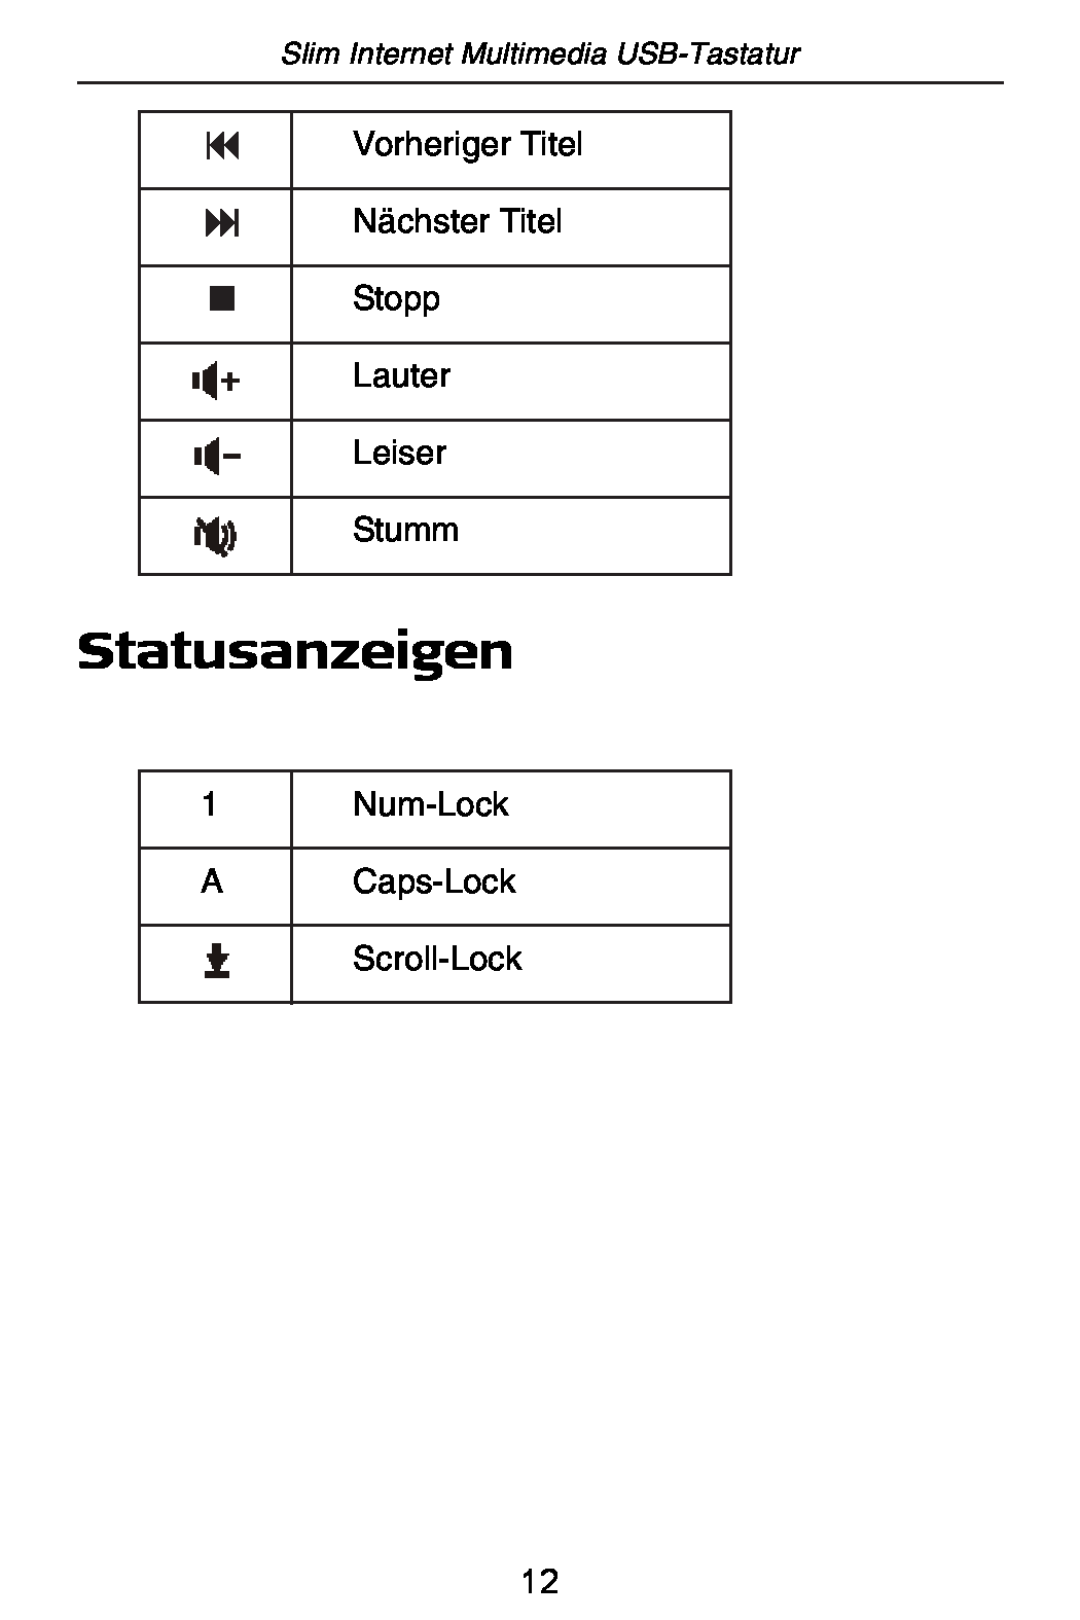 Targus slim internet multimedia USB keyboard Statusanzeigen, Vorheriger Titel Nächster Titel Stopp Lauter Leiser Stumm 